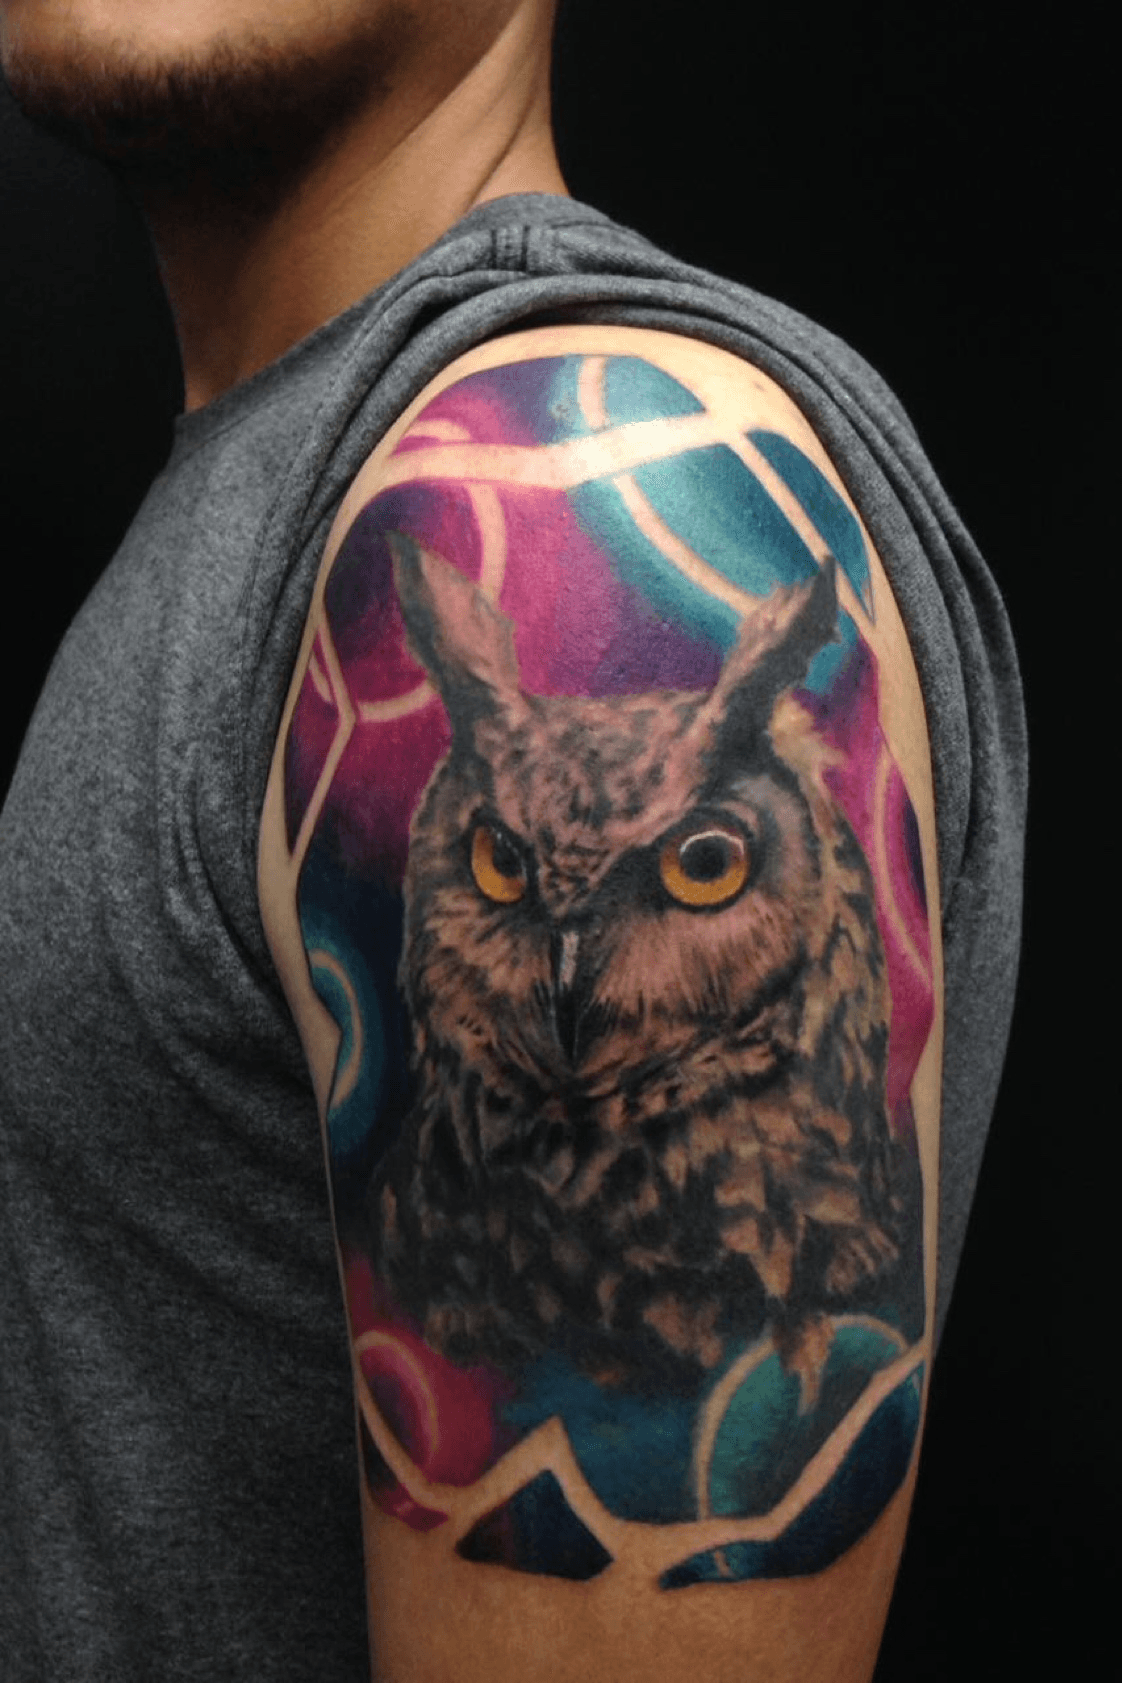 Cosmic Owl Tattoo Desing by AbrahamGart on DeviantArt